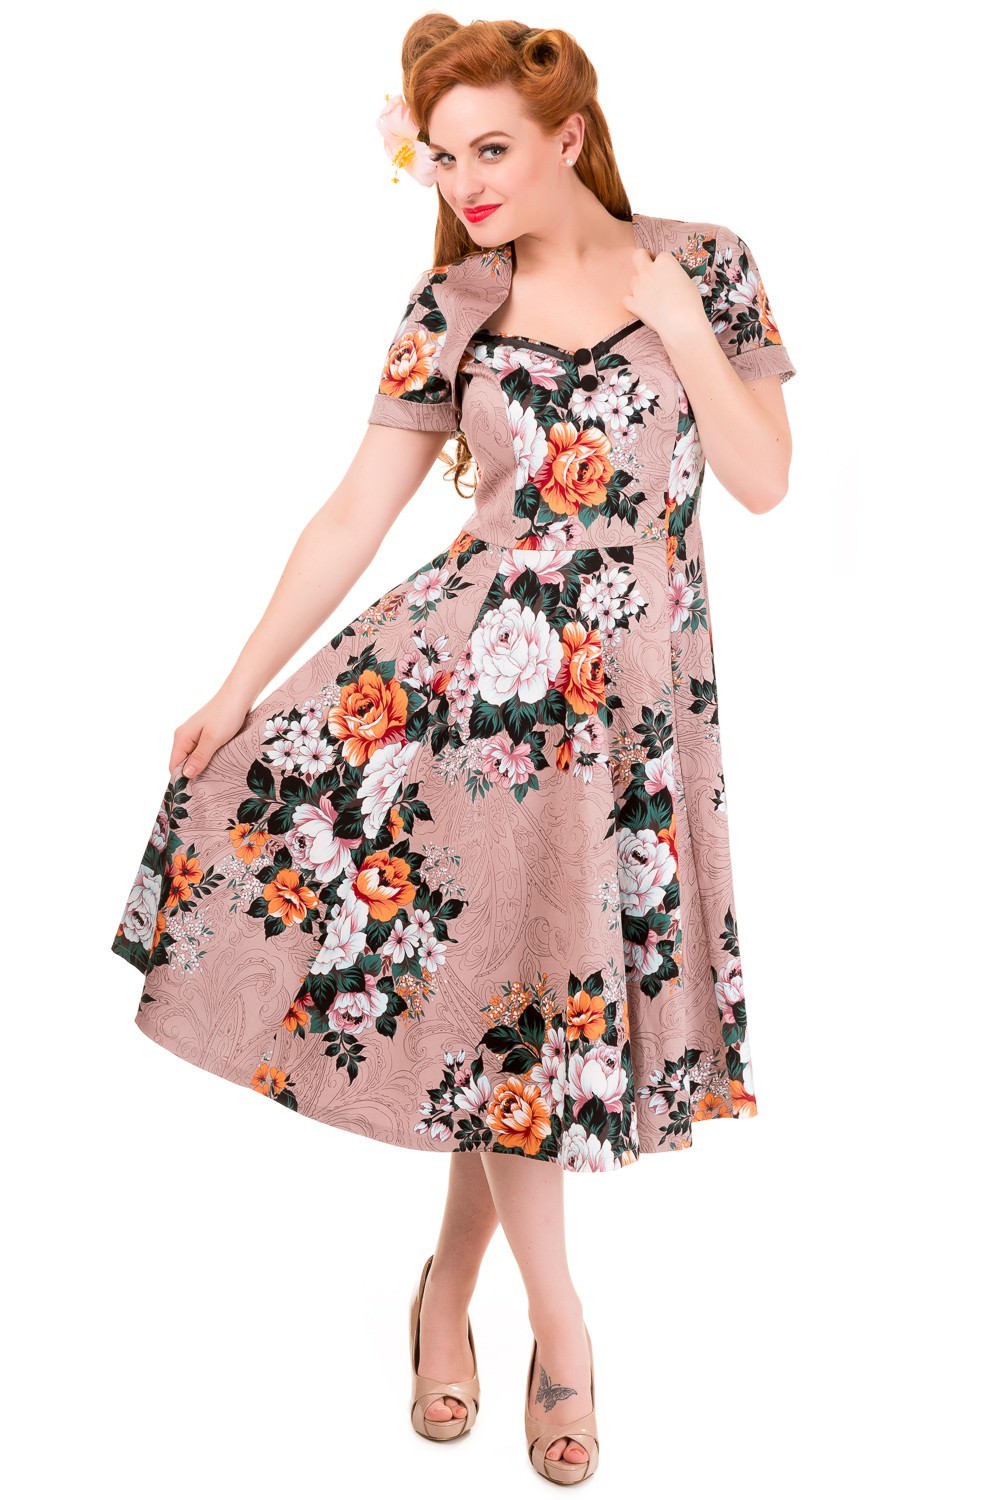 Vintage Style Floral Print Short Sleeve Party Dress